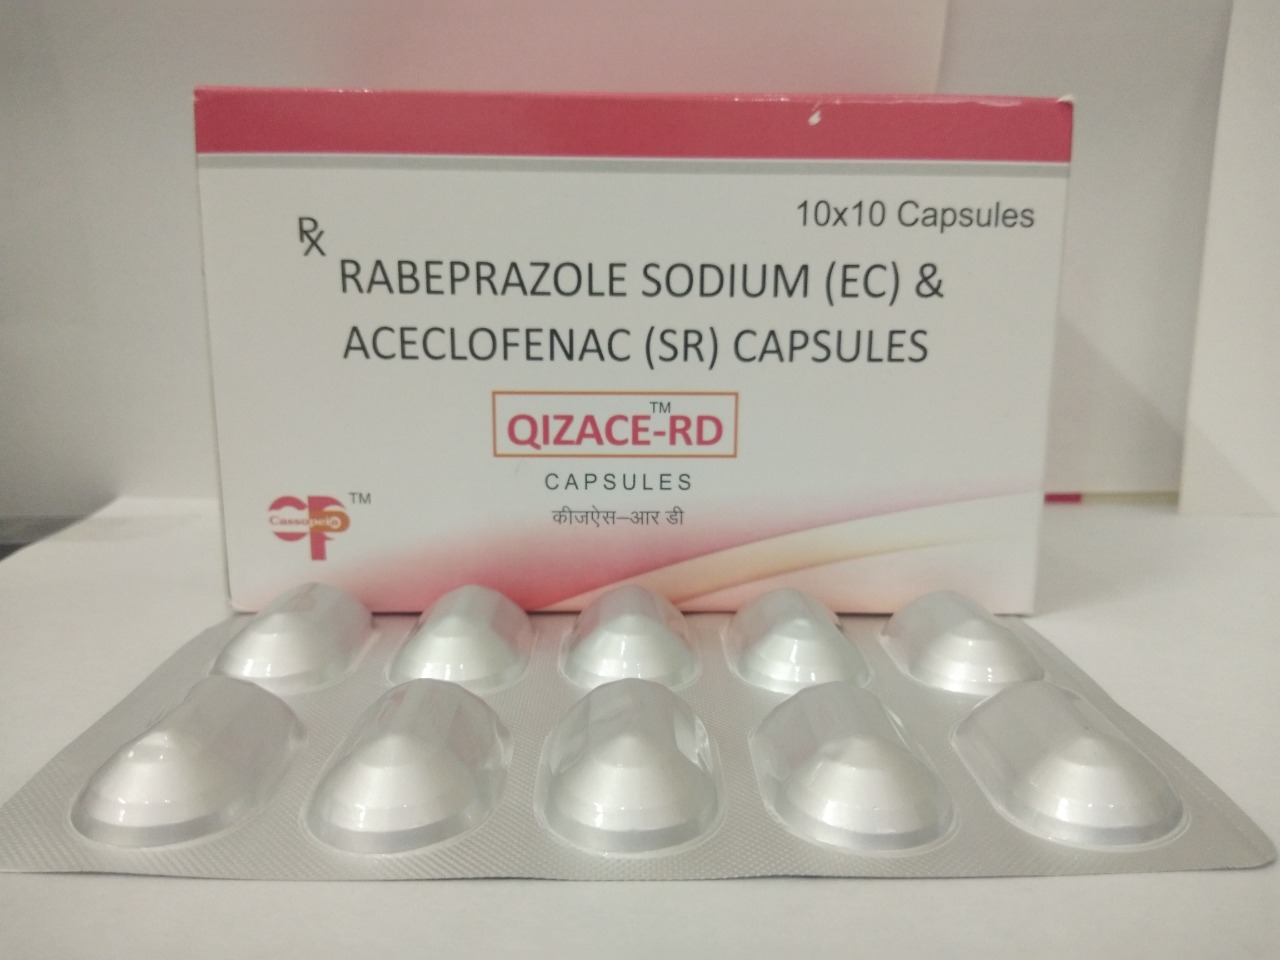 Product Name: Qizace RD, Compositions of Qizace RD are Rabeprazole Sodium (EC) & Aceclofenac (SR) Capsules - Cassopeia Pharmaceutical Pvt Ltd